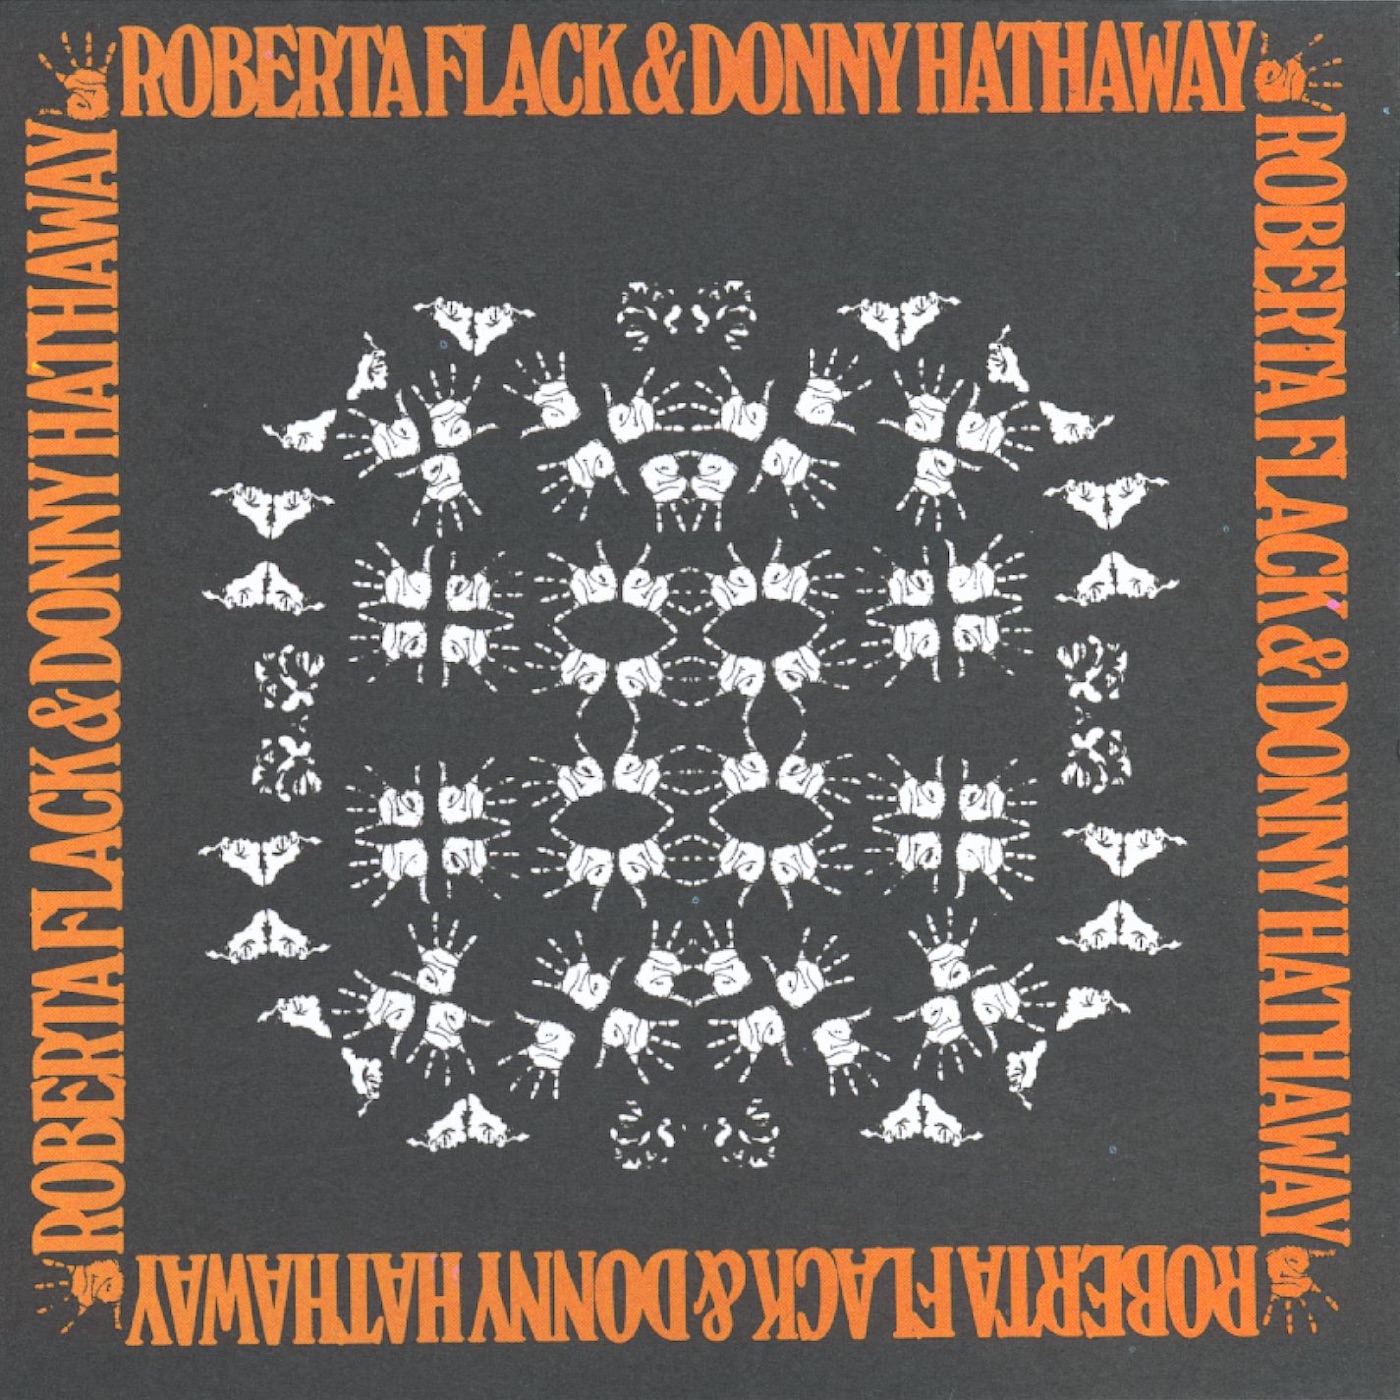 Roberta Flack & Donny Hathaway by Roberta Flack, Donny Hathaway